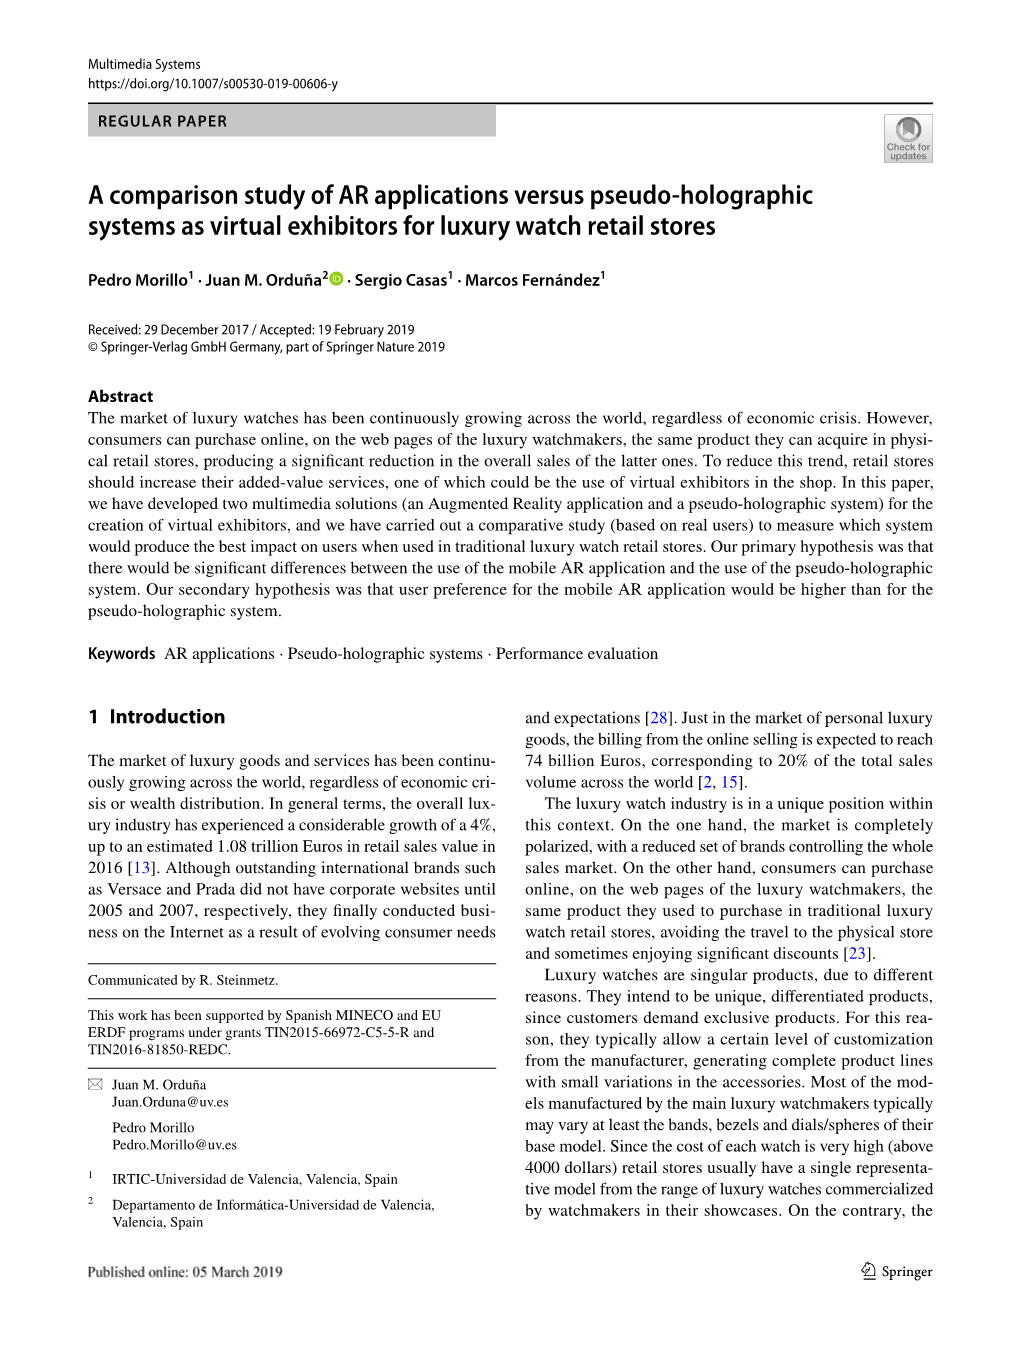 A Comparison Study of AR Applications Versus Pseudo-Holographic